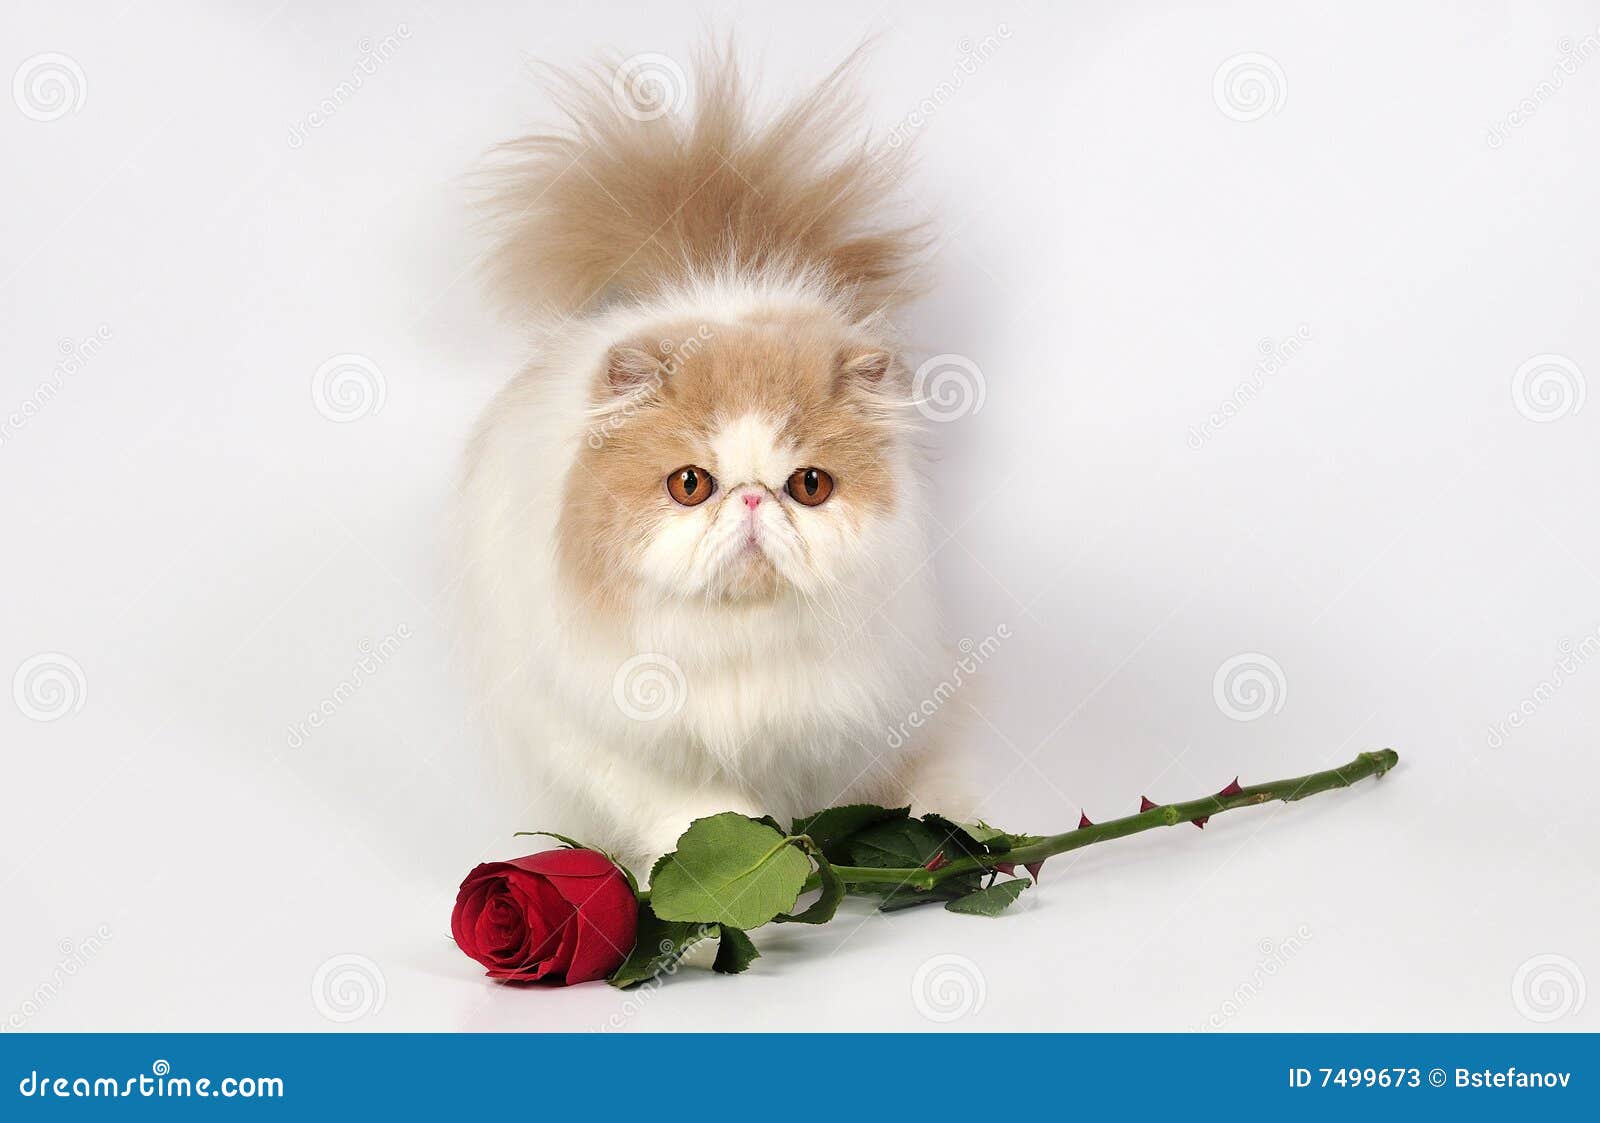 persian-cat-rose-7499673.jpg